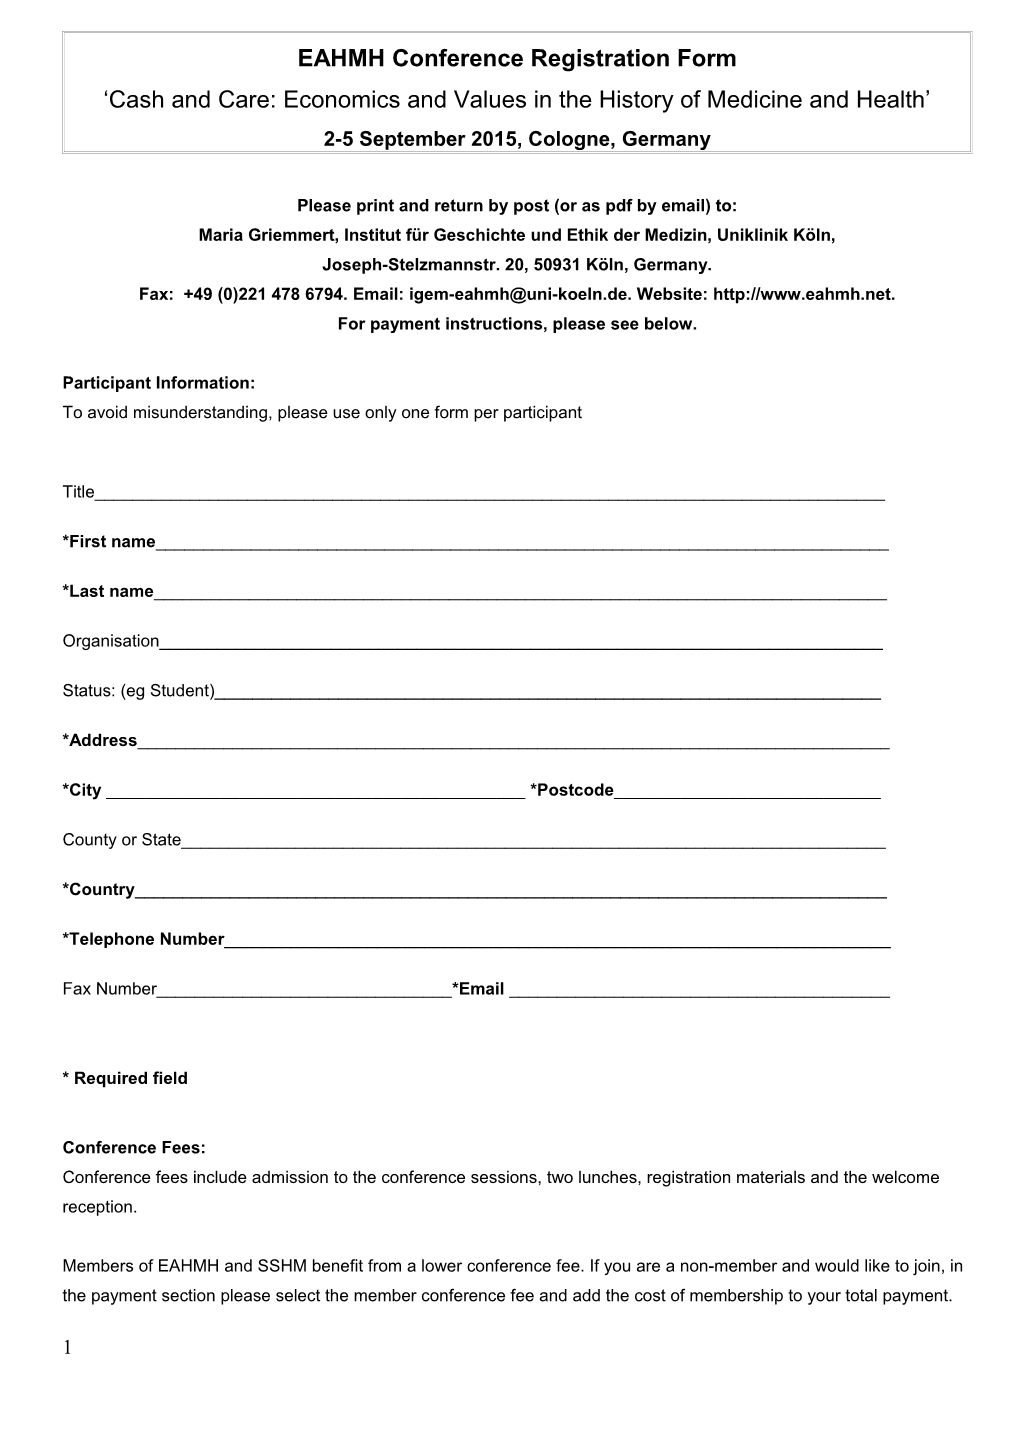 EAHMH Conference Registration Form